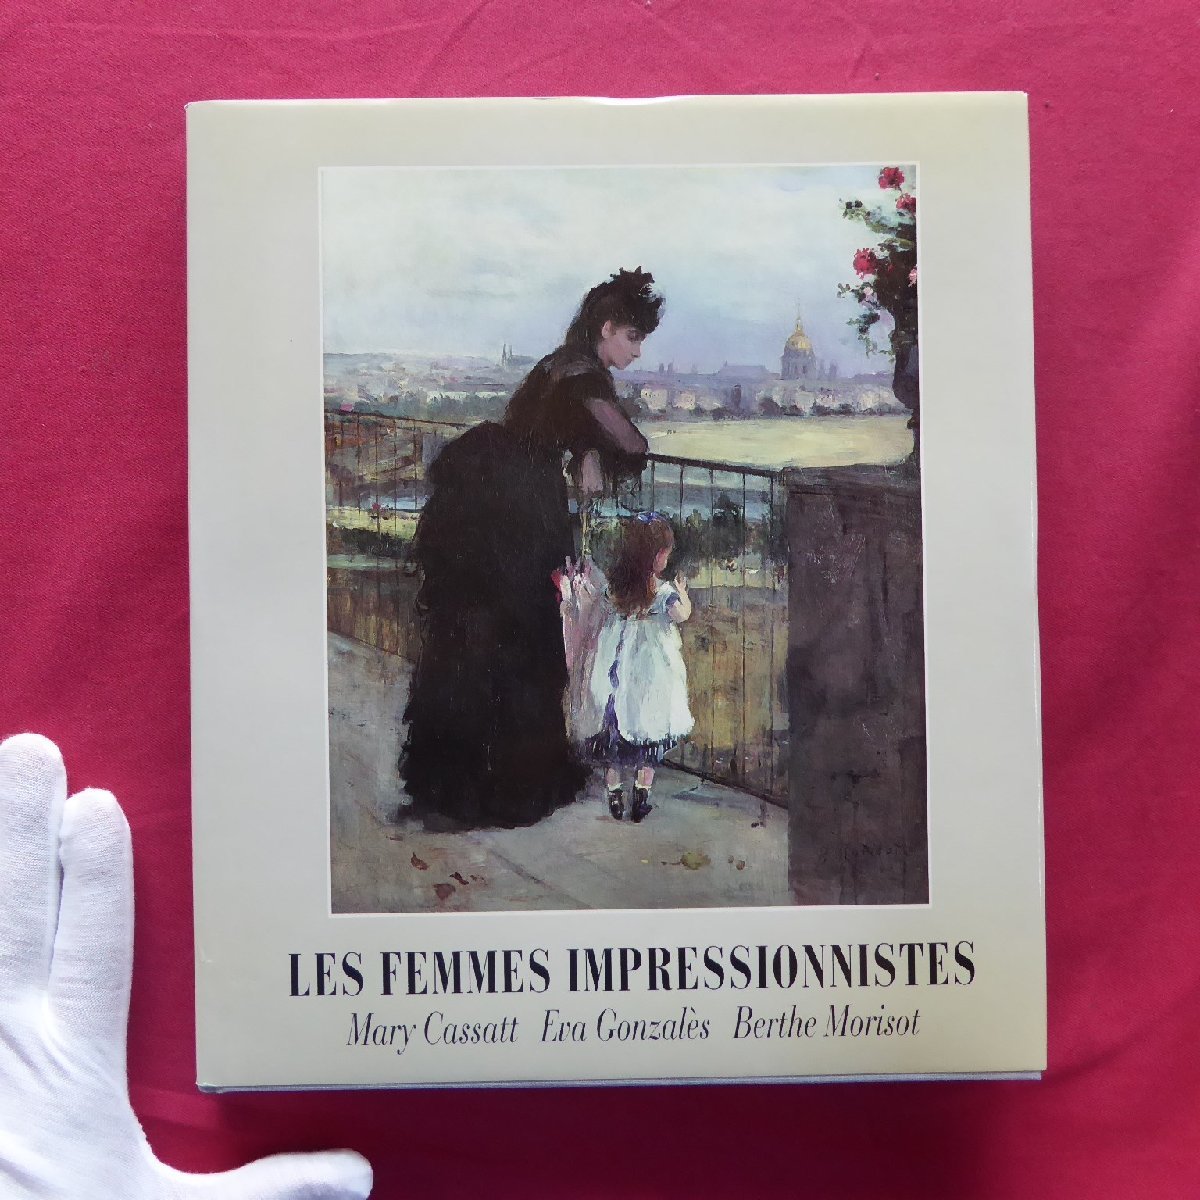 Grand 15/Livres étrangers [Femmes impressionnistes - Mary Cassatt, Eva González, Berthe Morisot/Les Femmes Impressionnistes/1993, Peinture, Livre d'art, Collection, Livre d'art